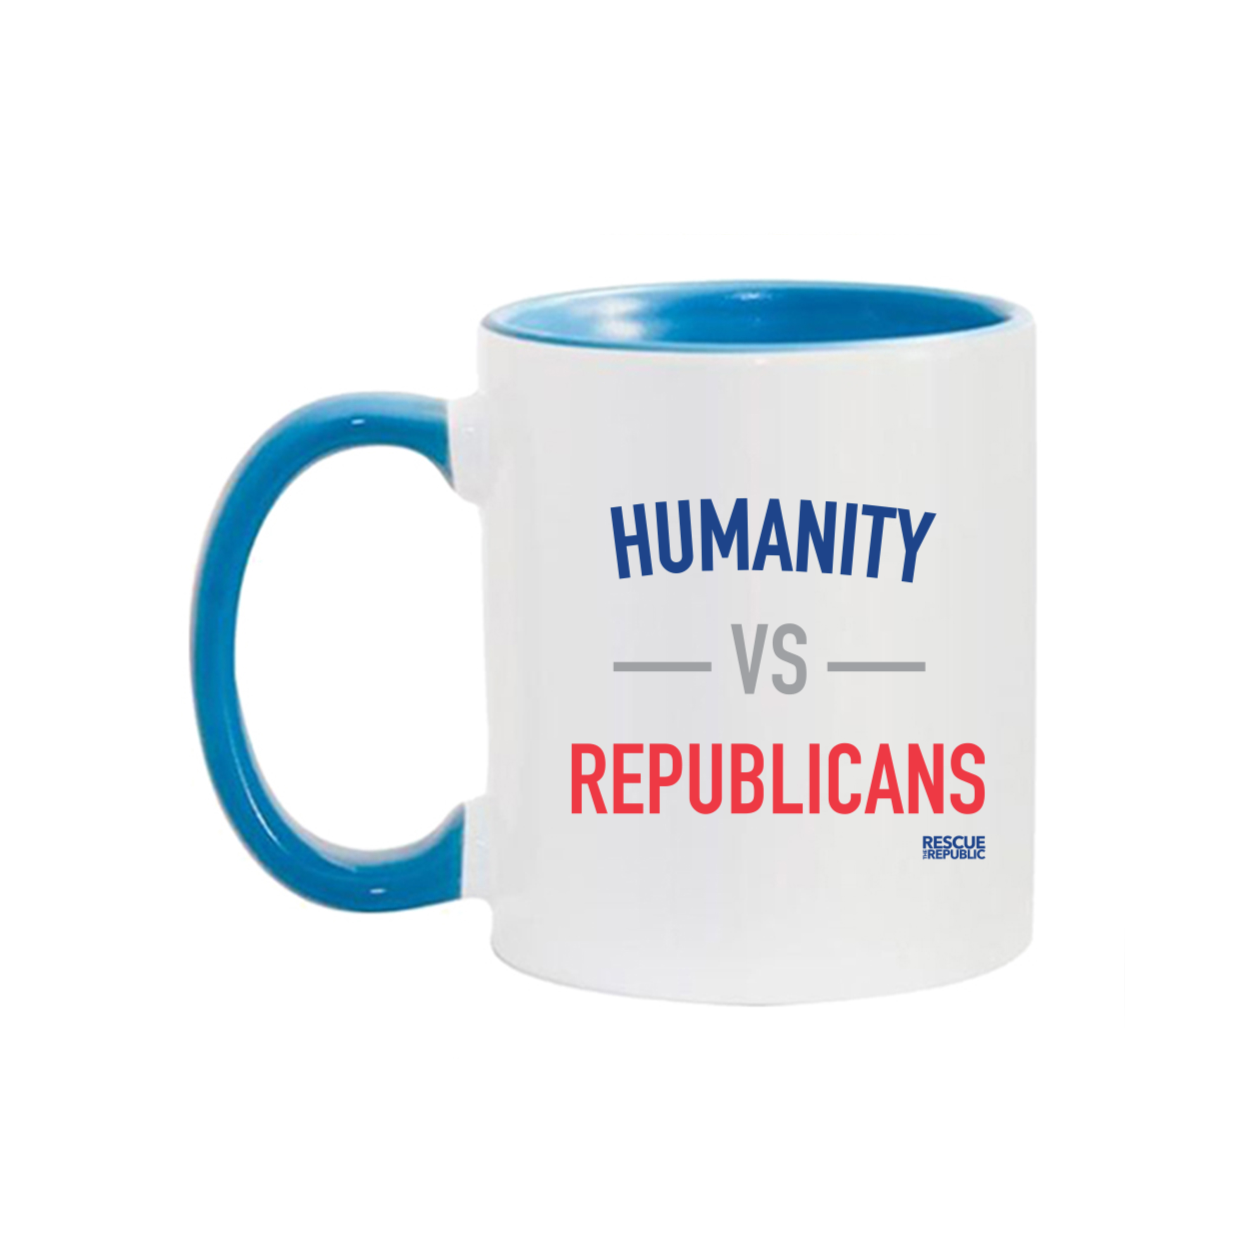 Humanity VS Republicans Mugs